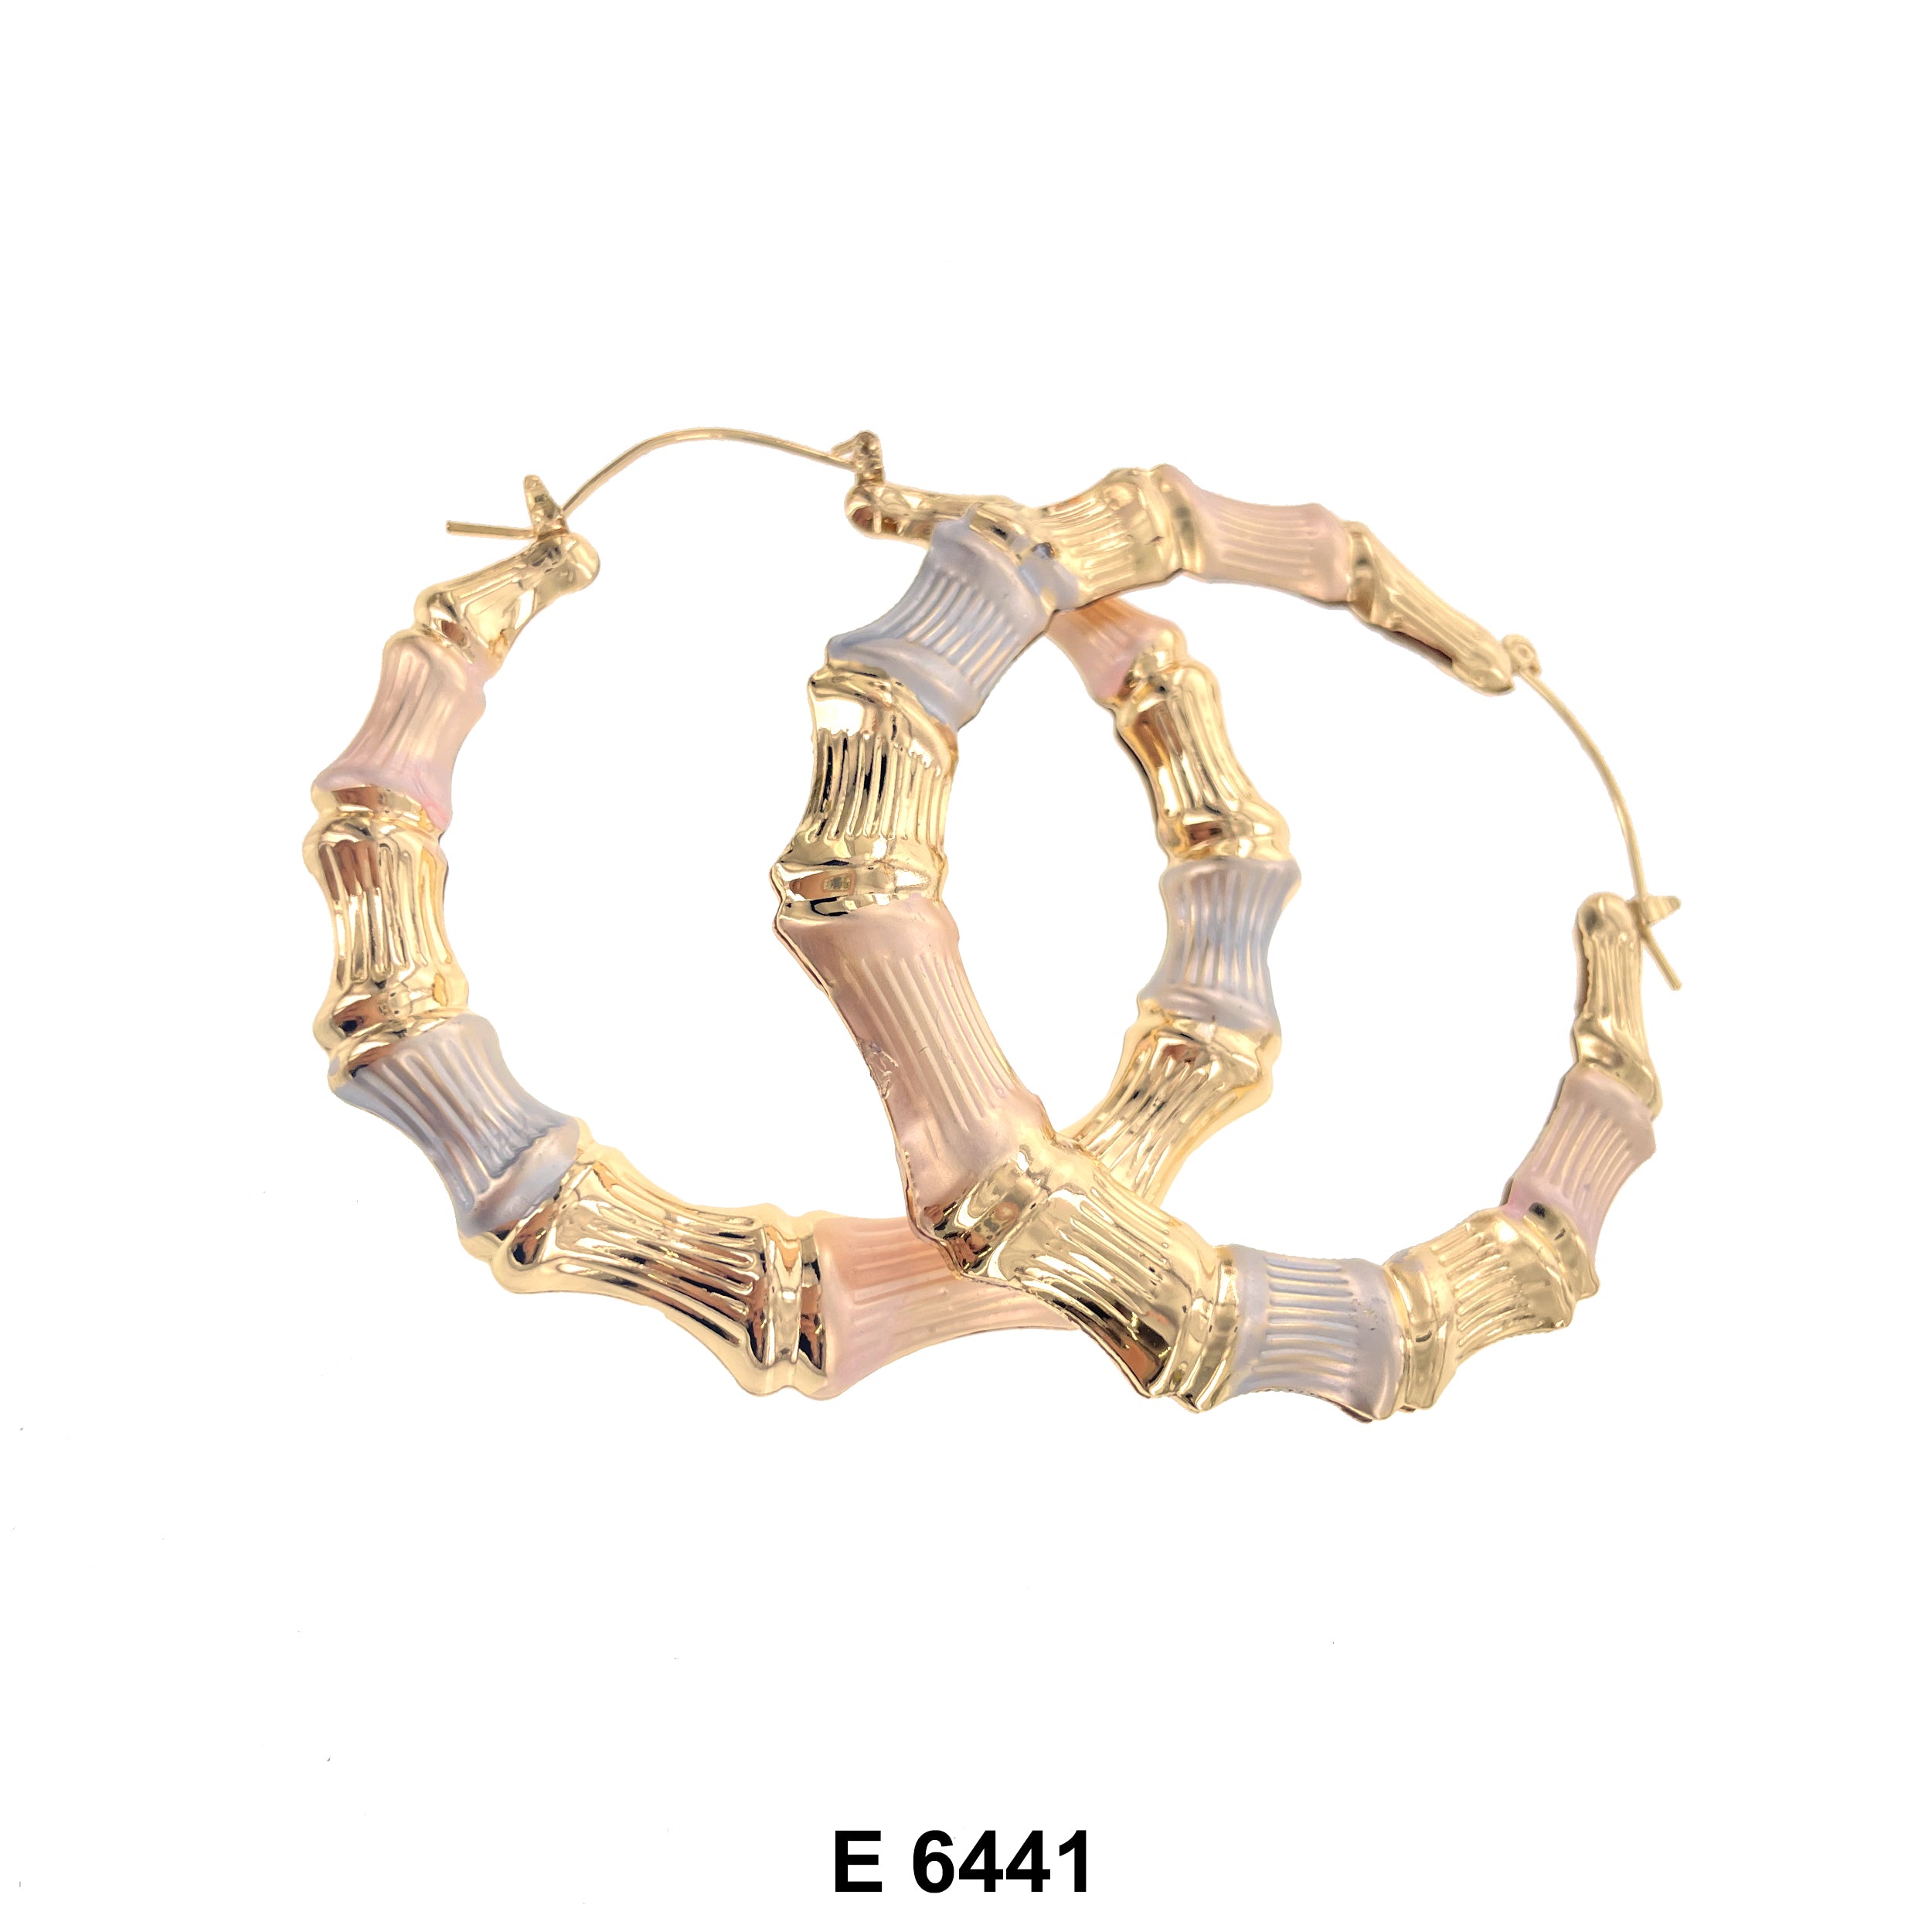 Engraved Hoop Earrings E 6441